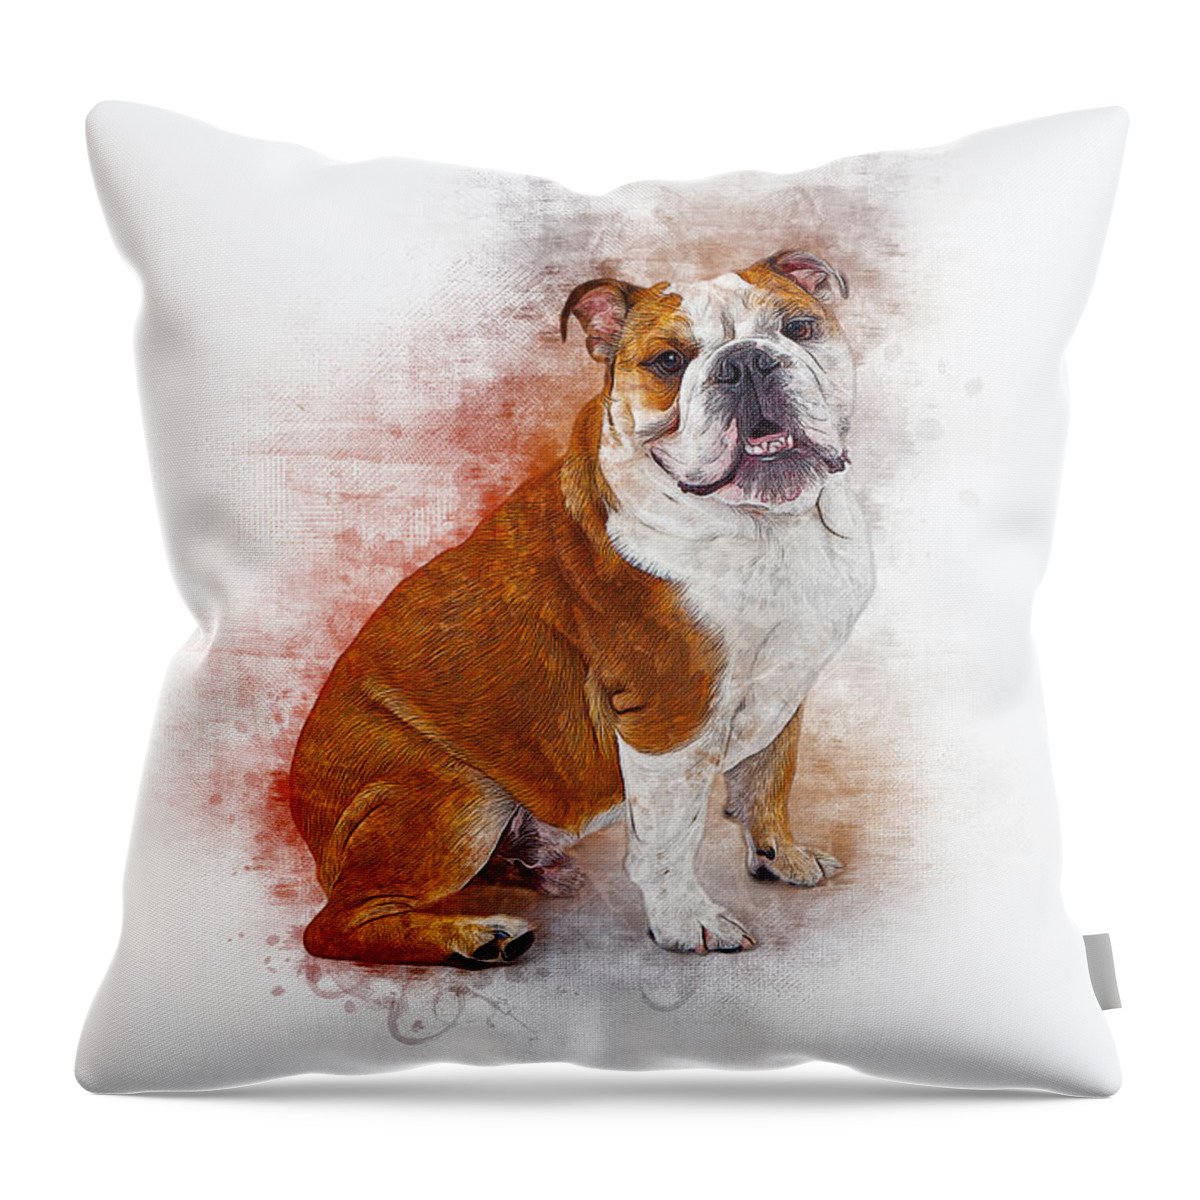 Dog Throw Pillow featuring the digital art Bulldog #1 by Ian Mitchell